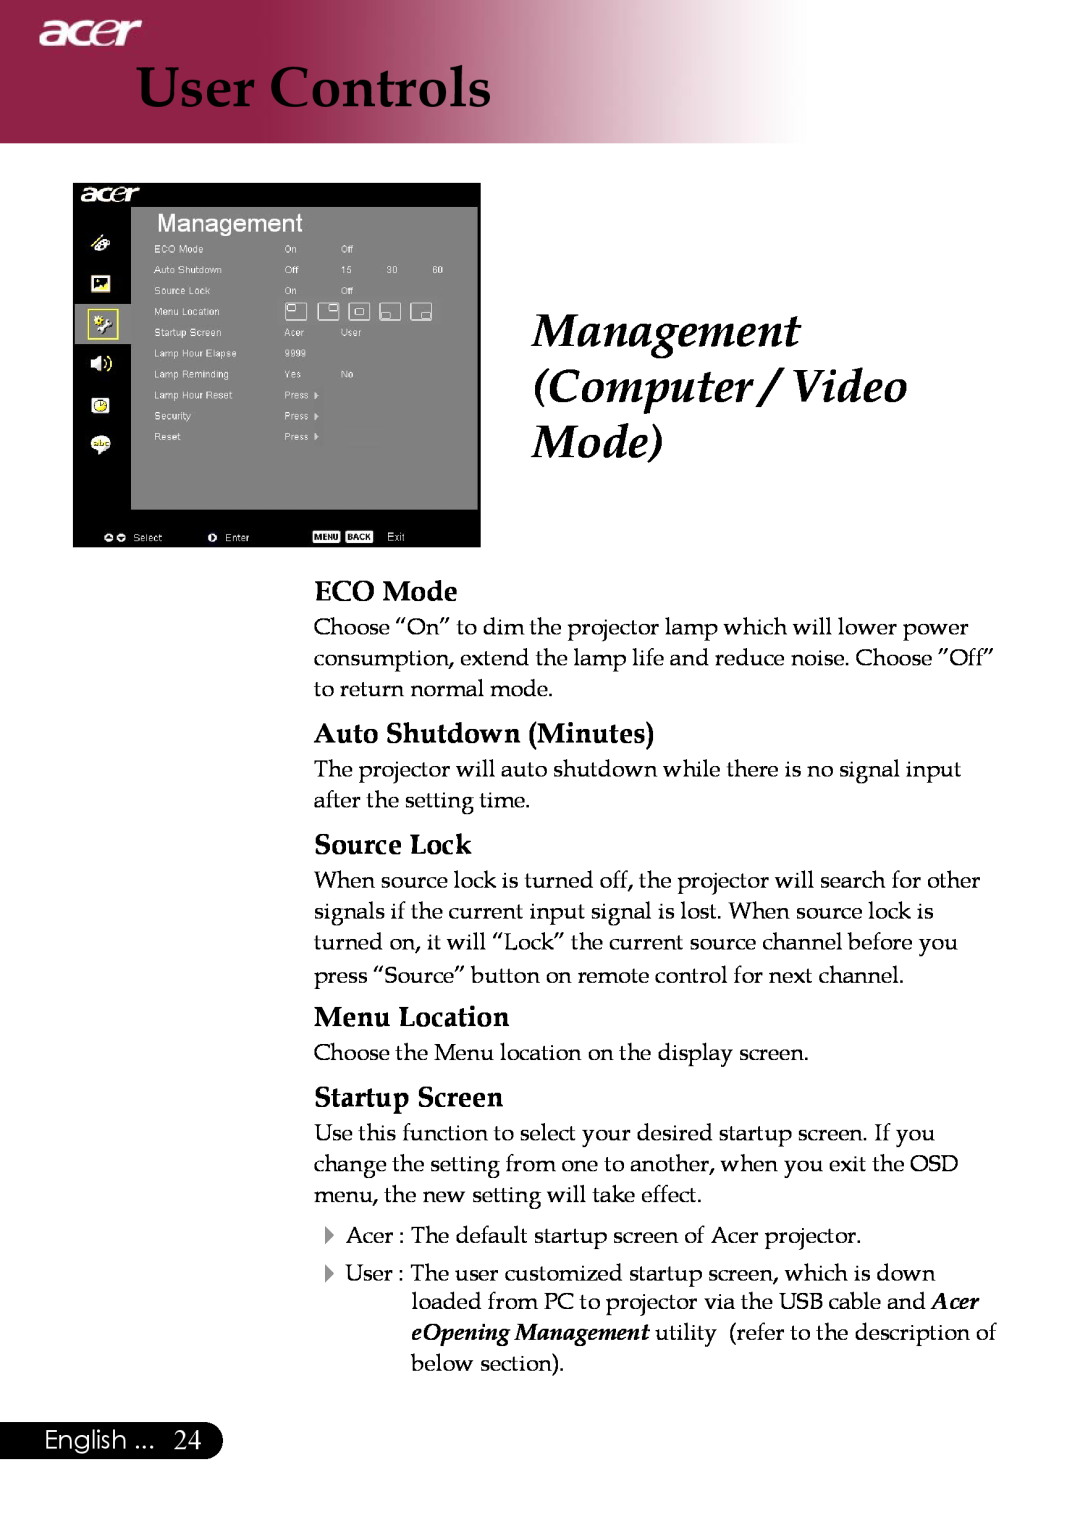 Acer PD323 Management Computer / Video Mode, ECO Mode, Auto Shutdown Minutes, Source Lock, Menu Location, Startup Screen 